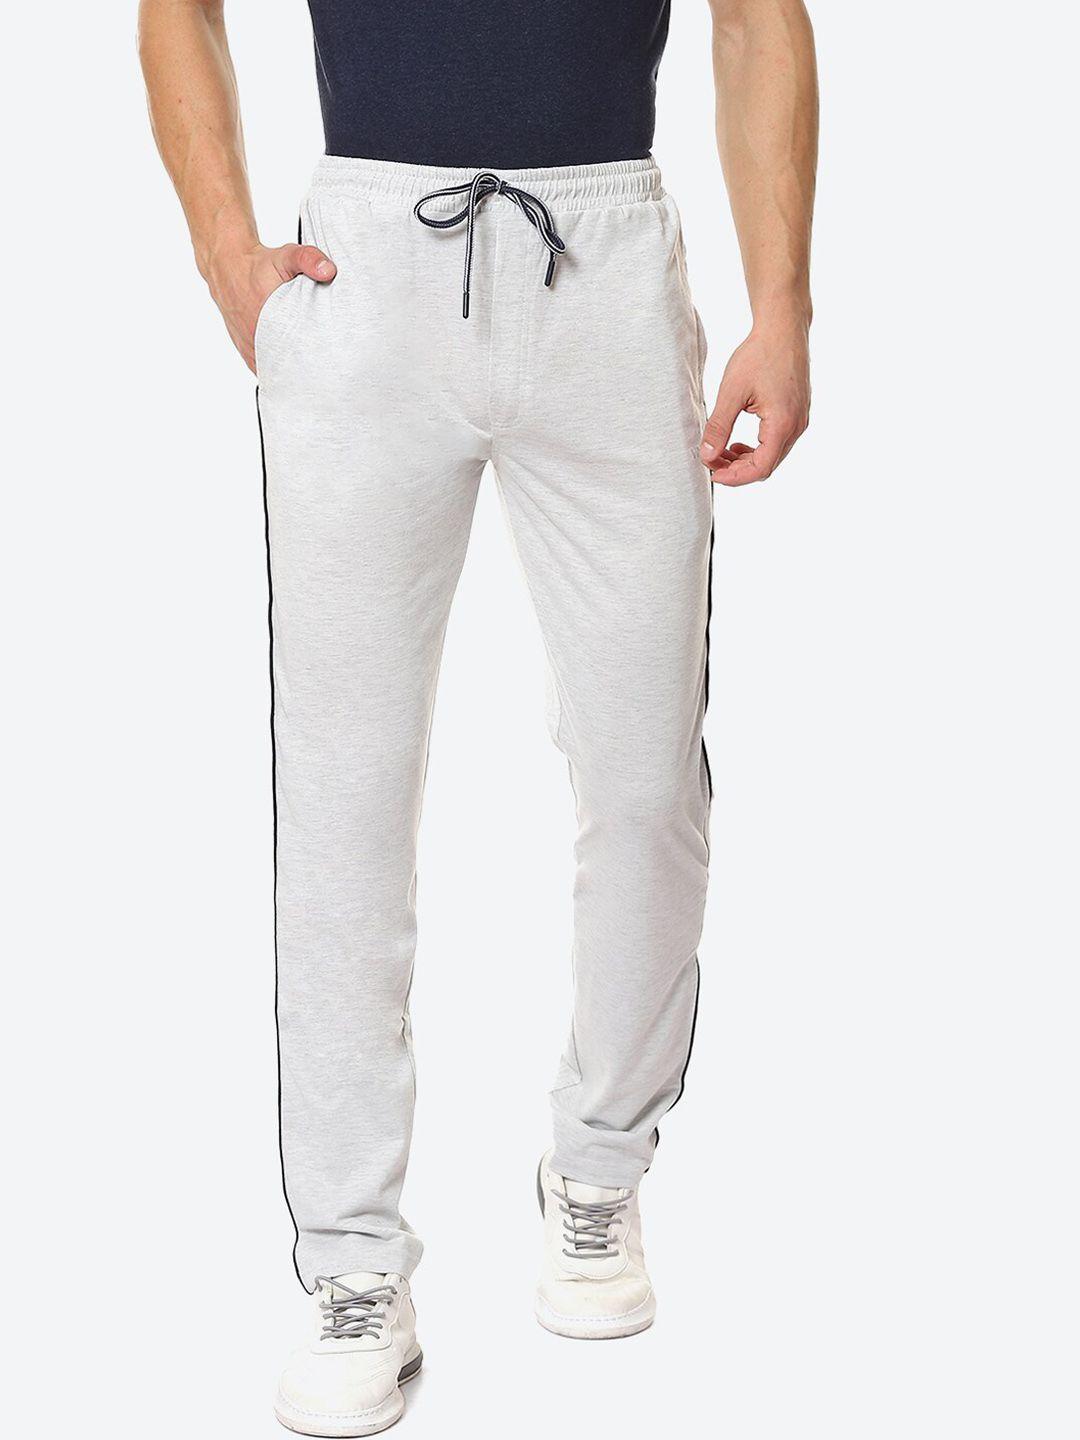 vinenzia-men-grey-melange-solid-track-pants